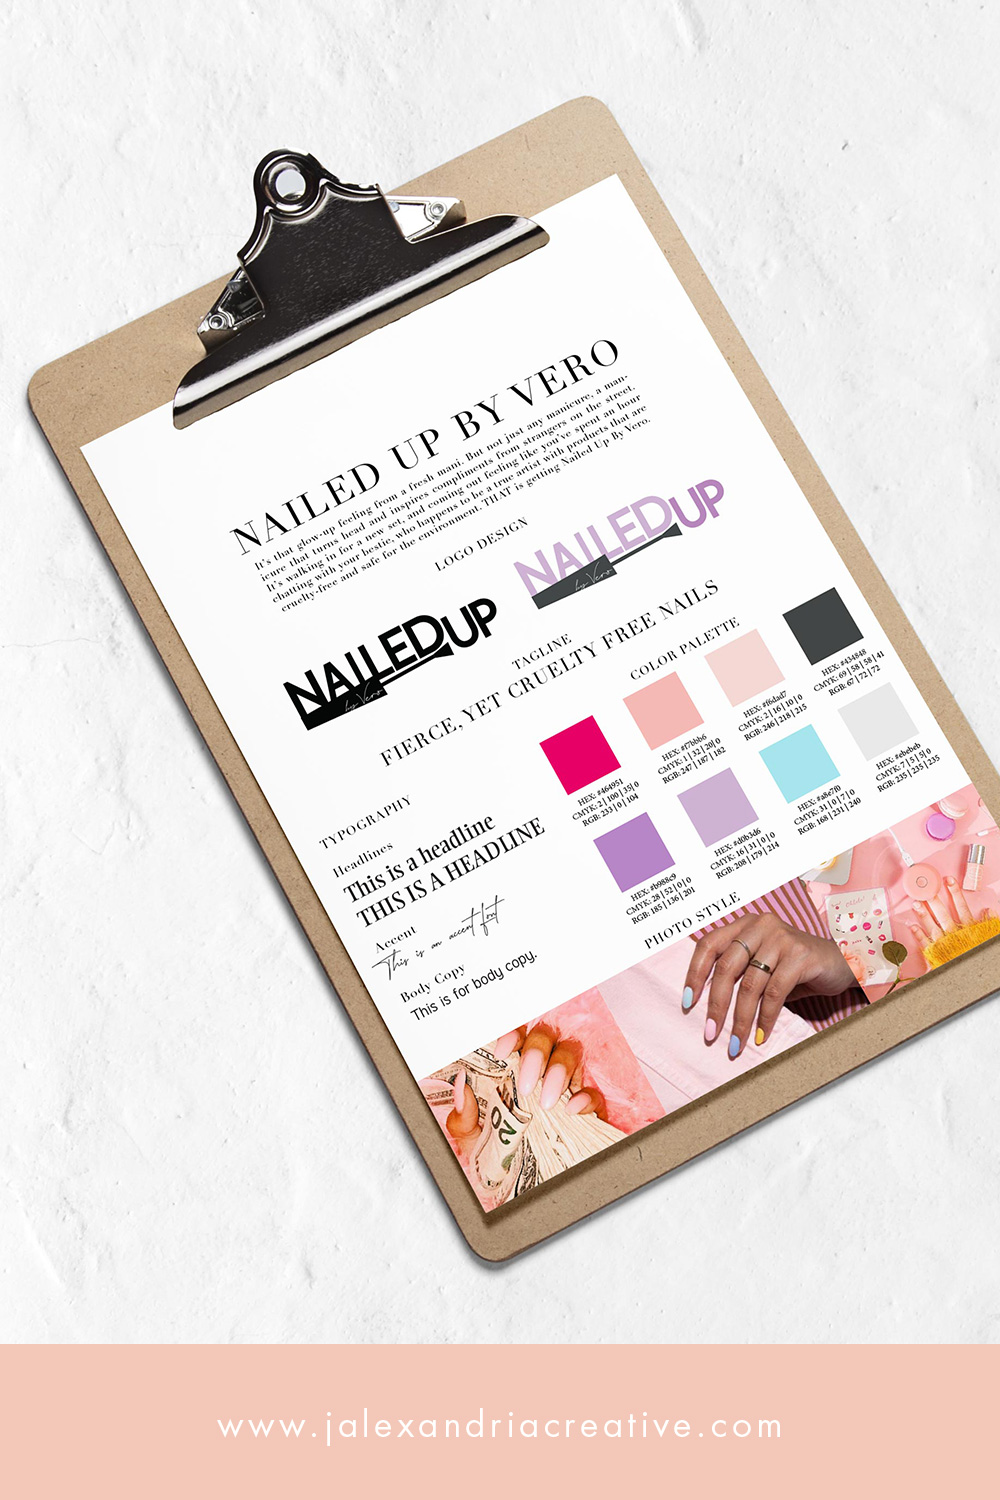 Nail Salon Branding by J. Alexandria Creative | Brand Board Design